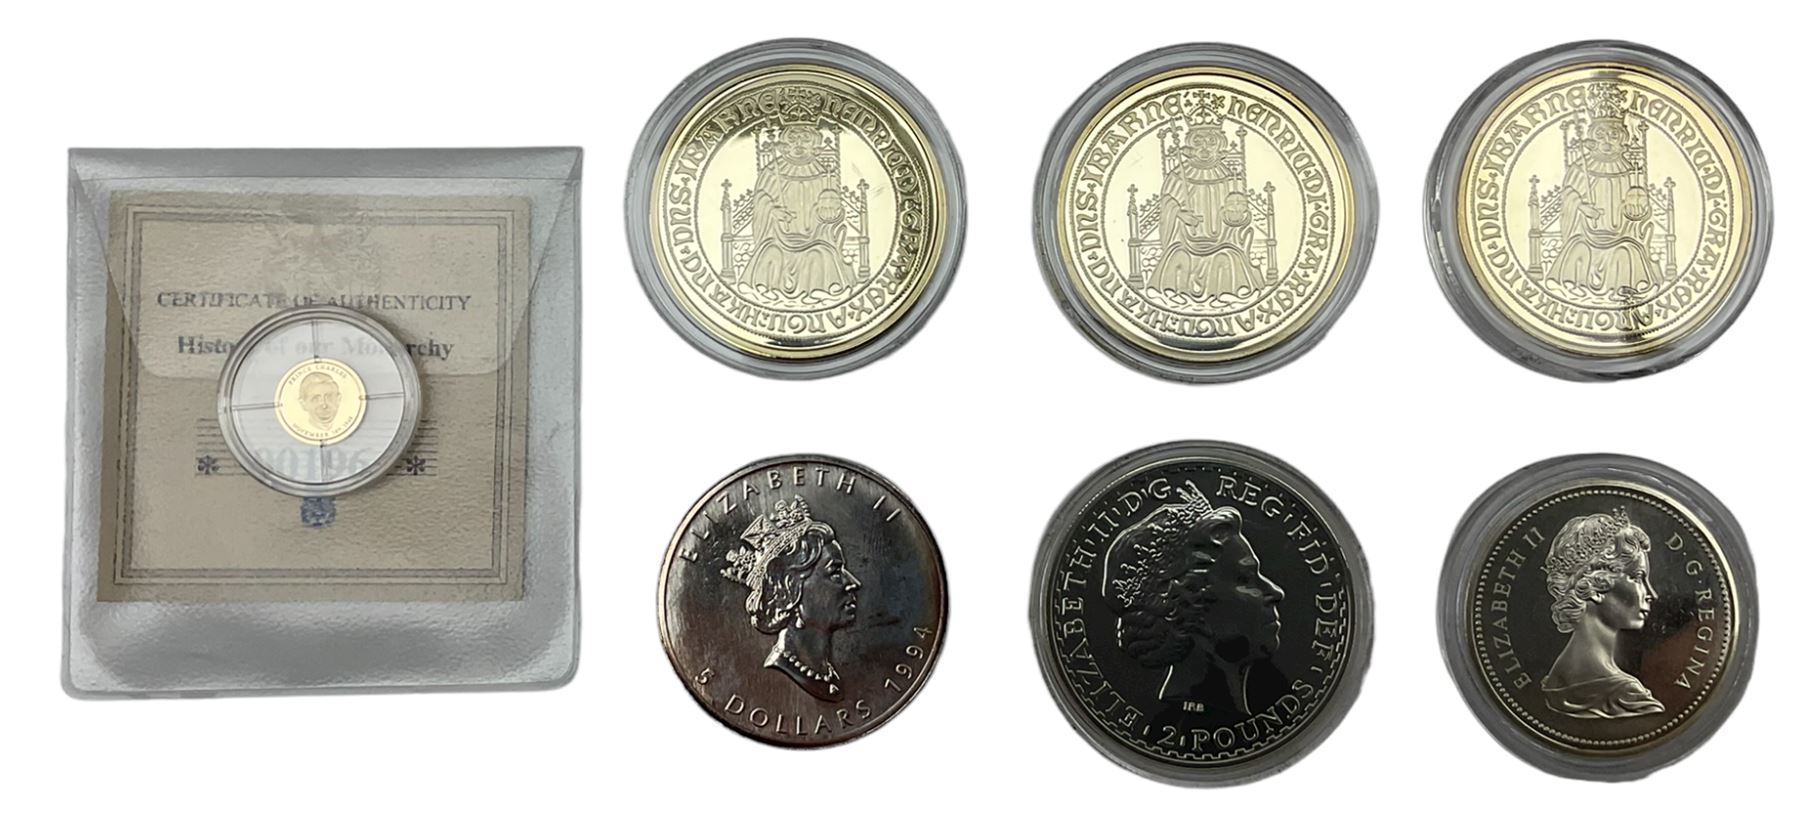 Queen Elizabeth II 2009 Britannia fine silver one ounce coin